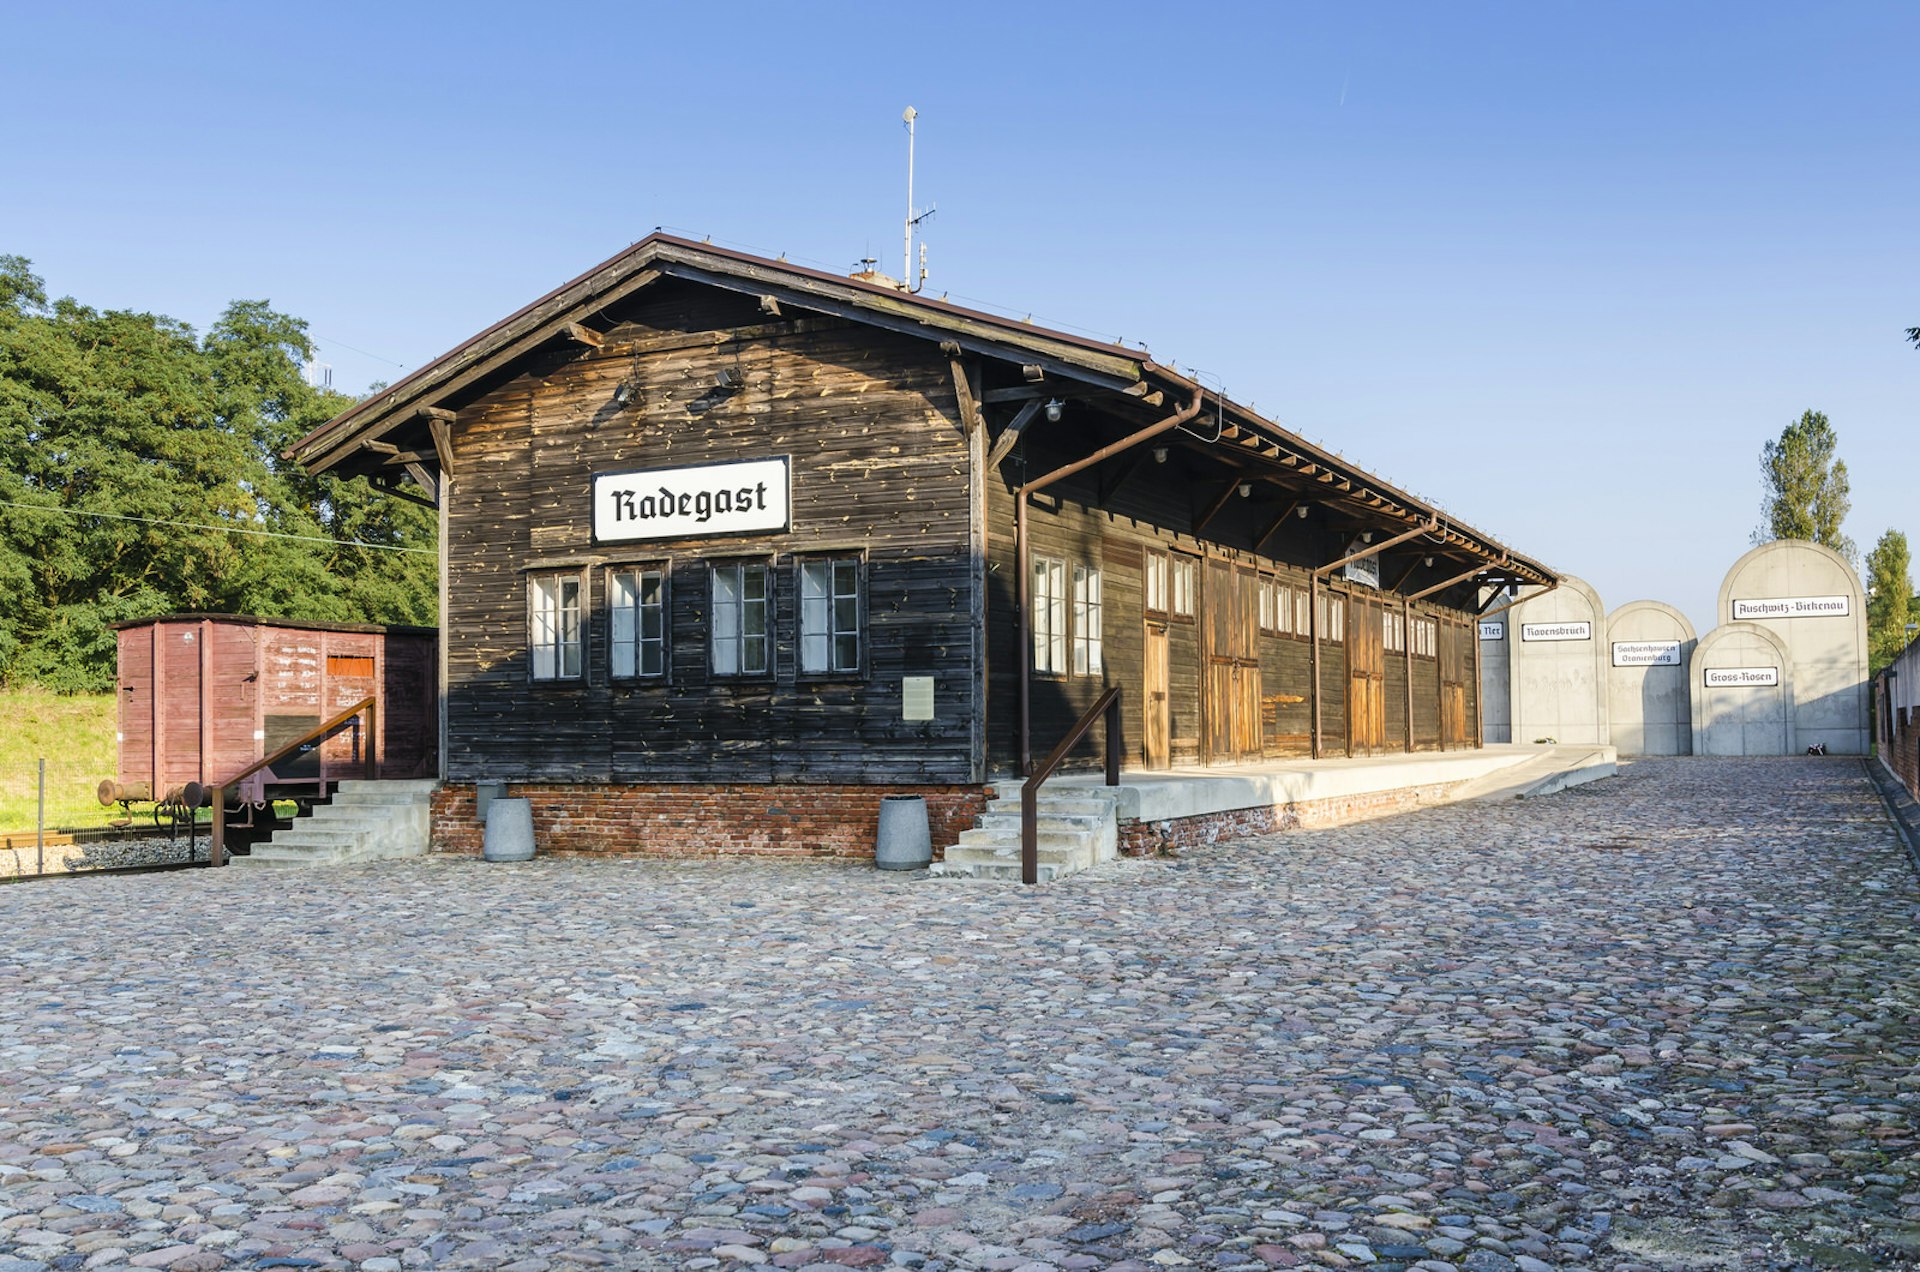 The former Radegast railway station, now a memorial commemorating Jews deported and murdered in German Nazi concentration camps © Dejan Gospodarek / Shutterstock